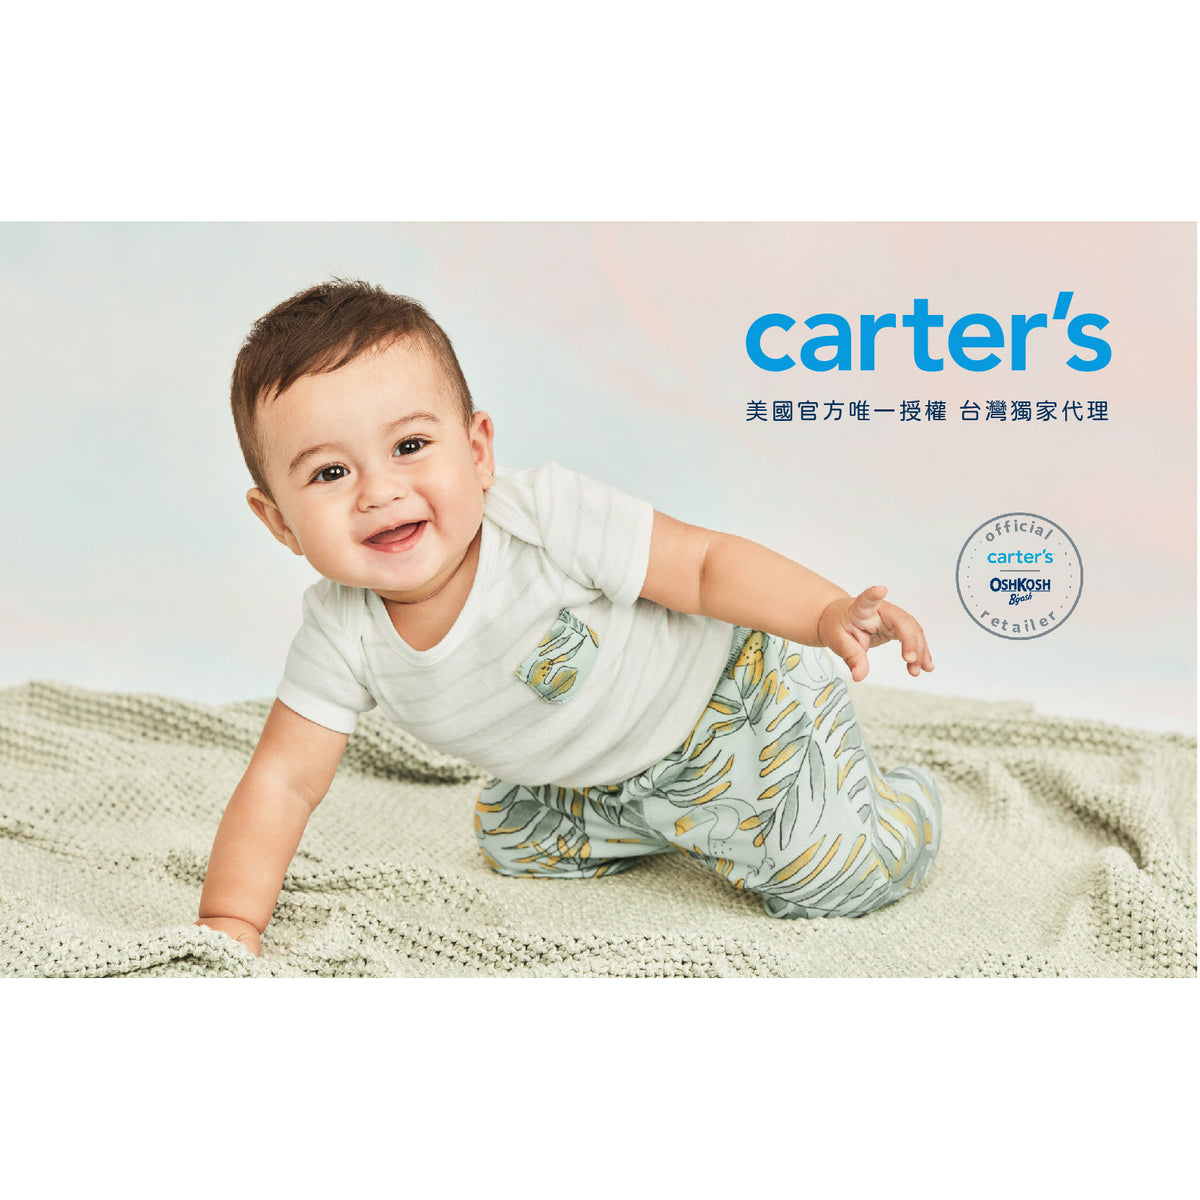 Carter's 藍色居家休閒長褲(6M-24M)